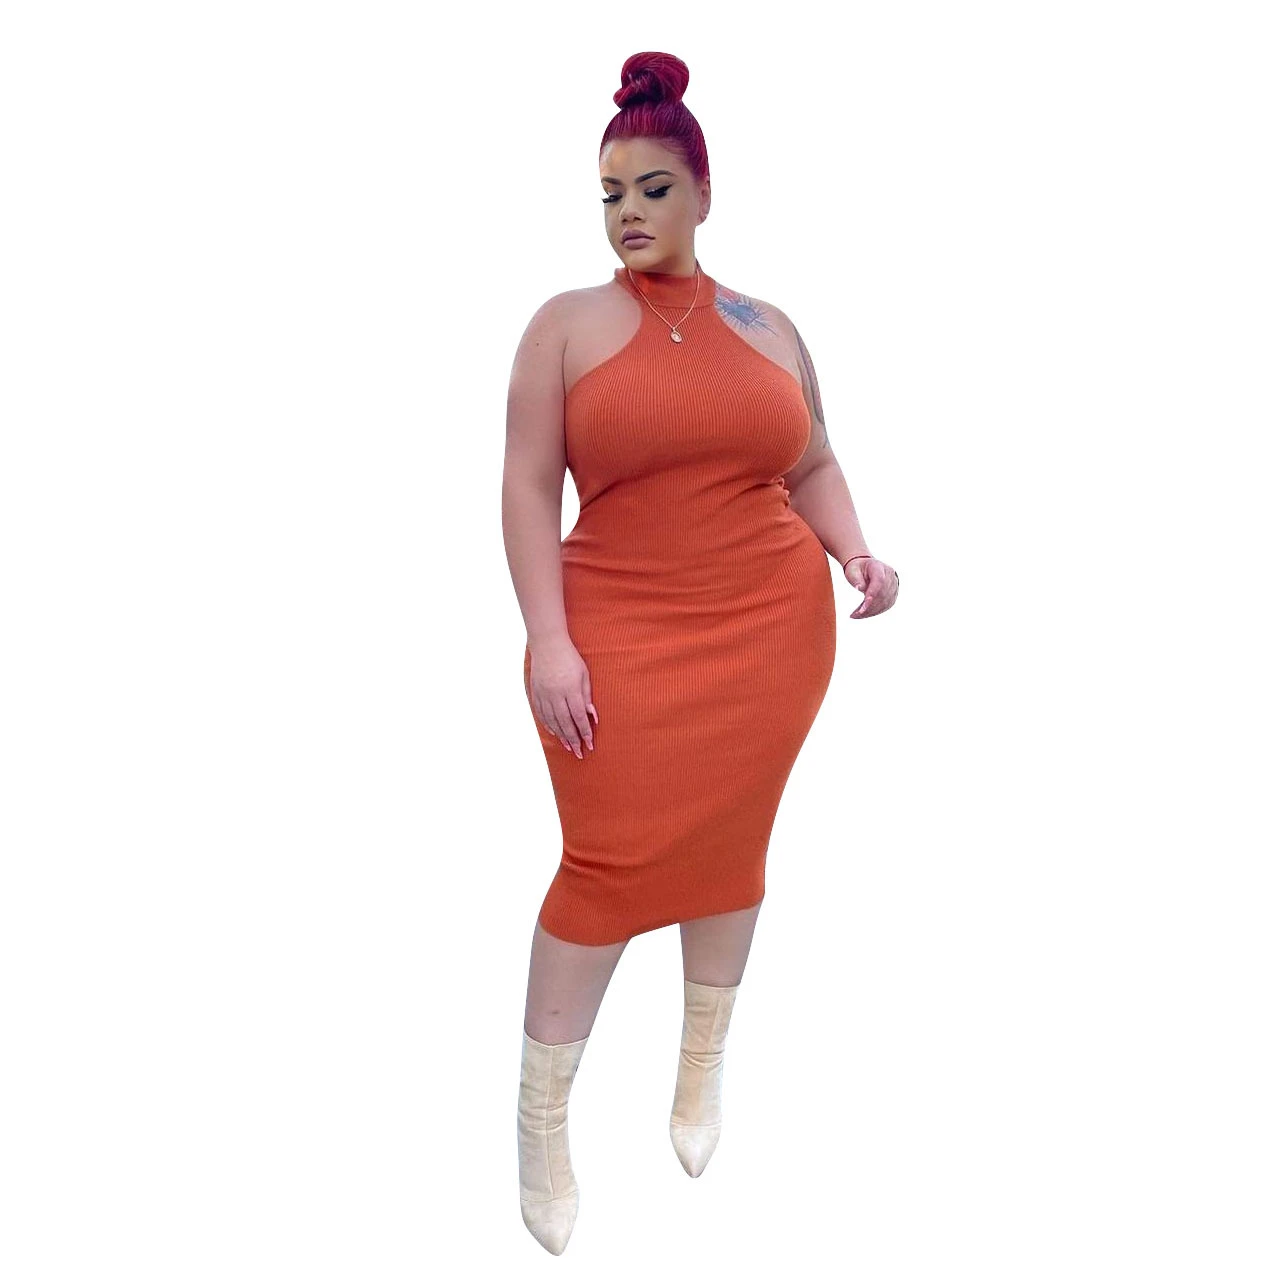 Womens clothing 2021 summer dress woman tops fashionable Halter style sleeveless slim sexy dress hejJ6048